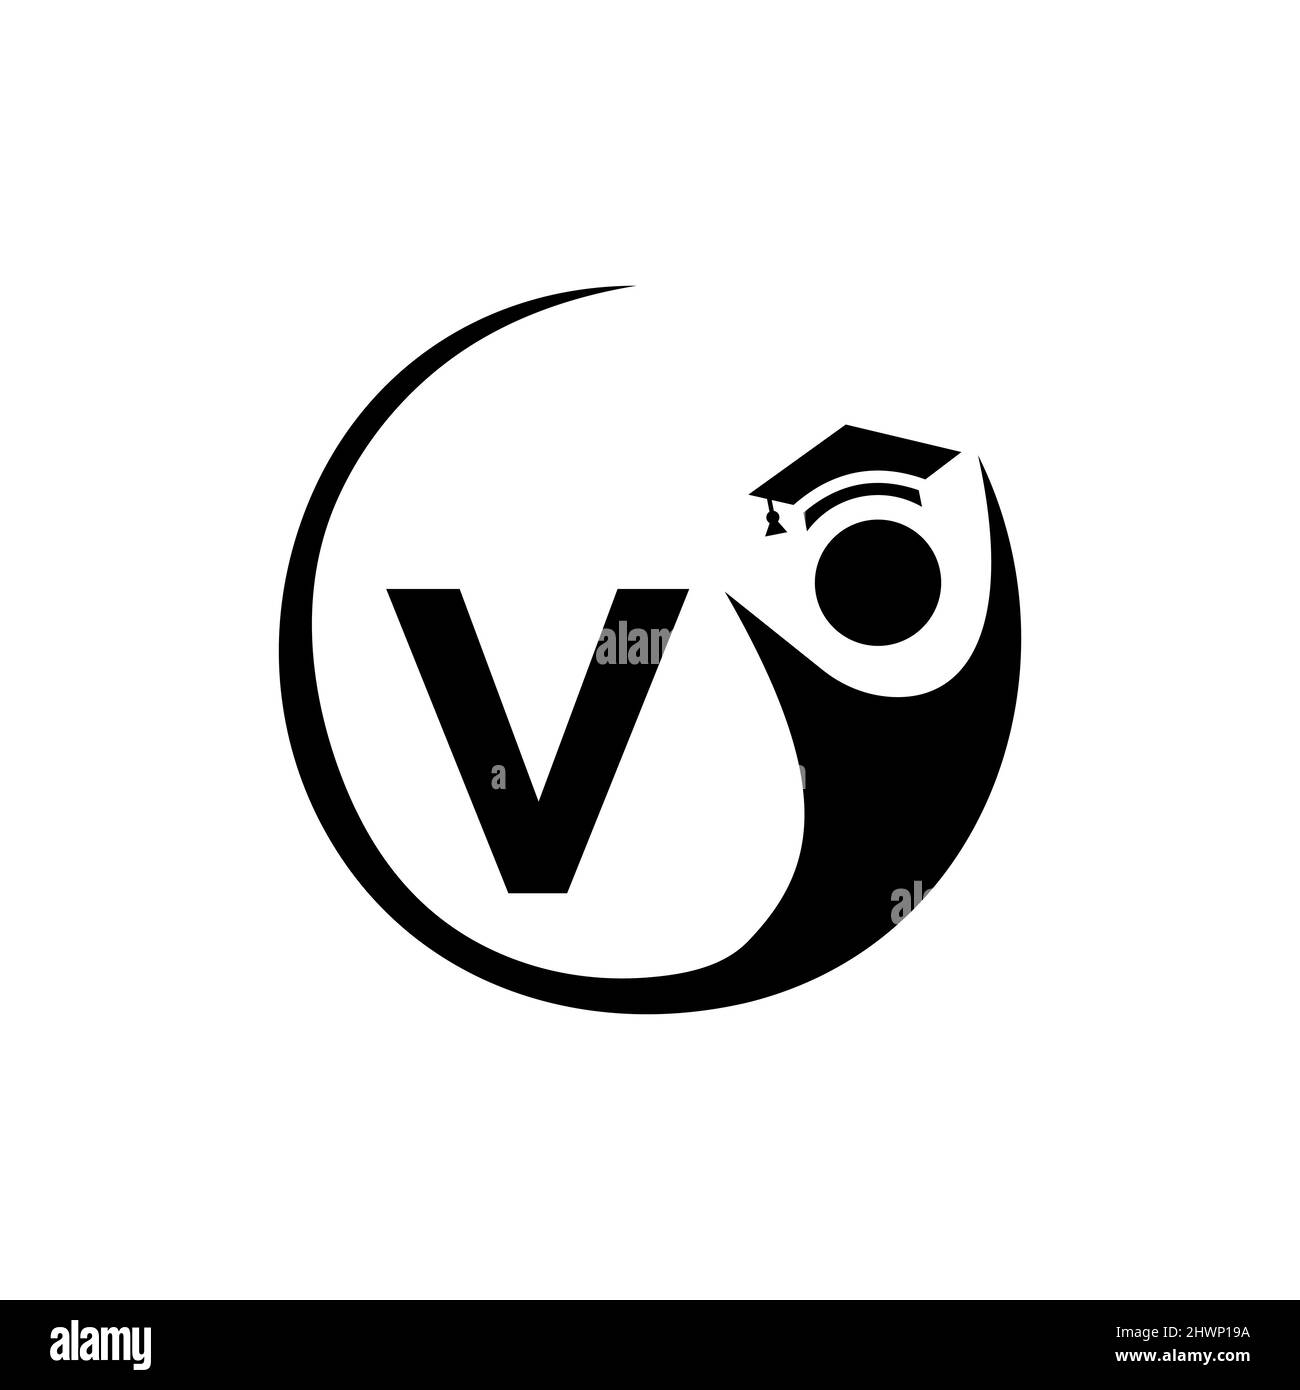 Letter V Education Logo Template. Education Logo On V Letter, Initial Education Hat Concept Template Stock Vector